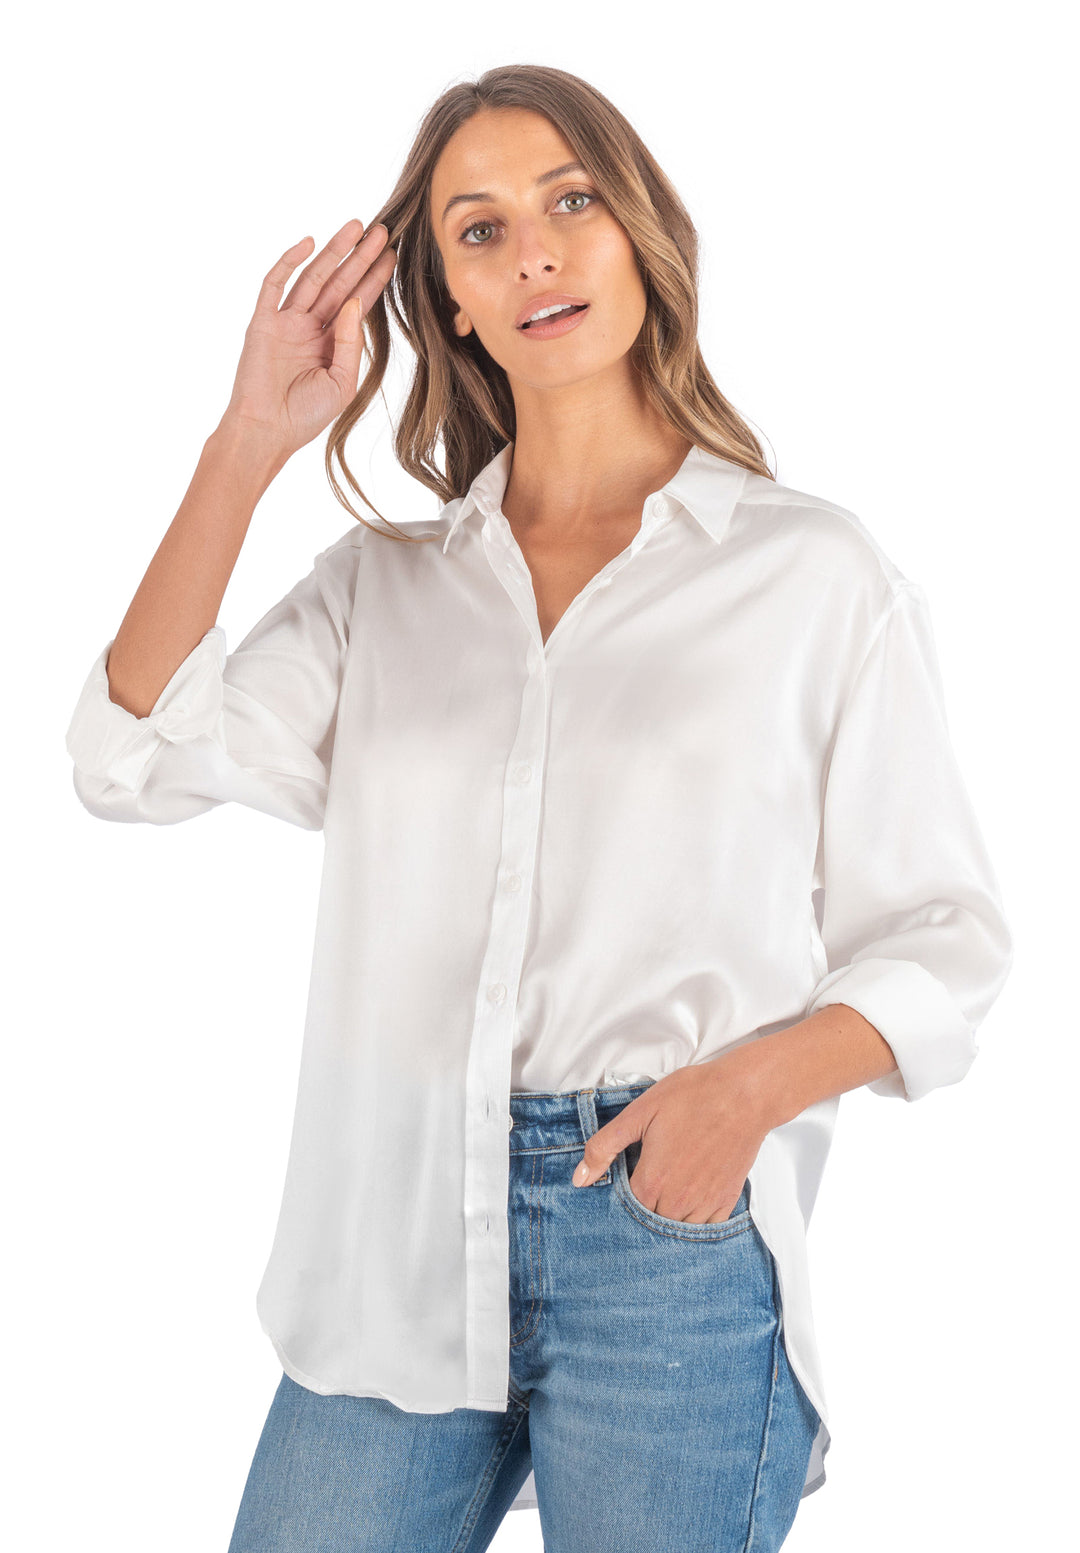 Soie White Oversized Shirt 100% Silk Shirt